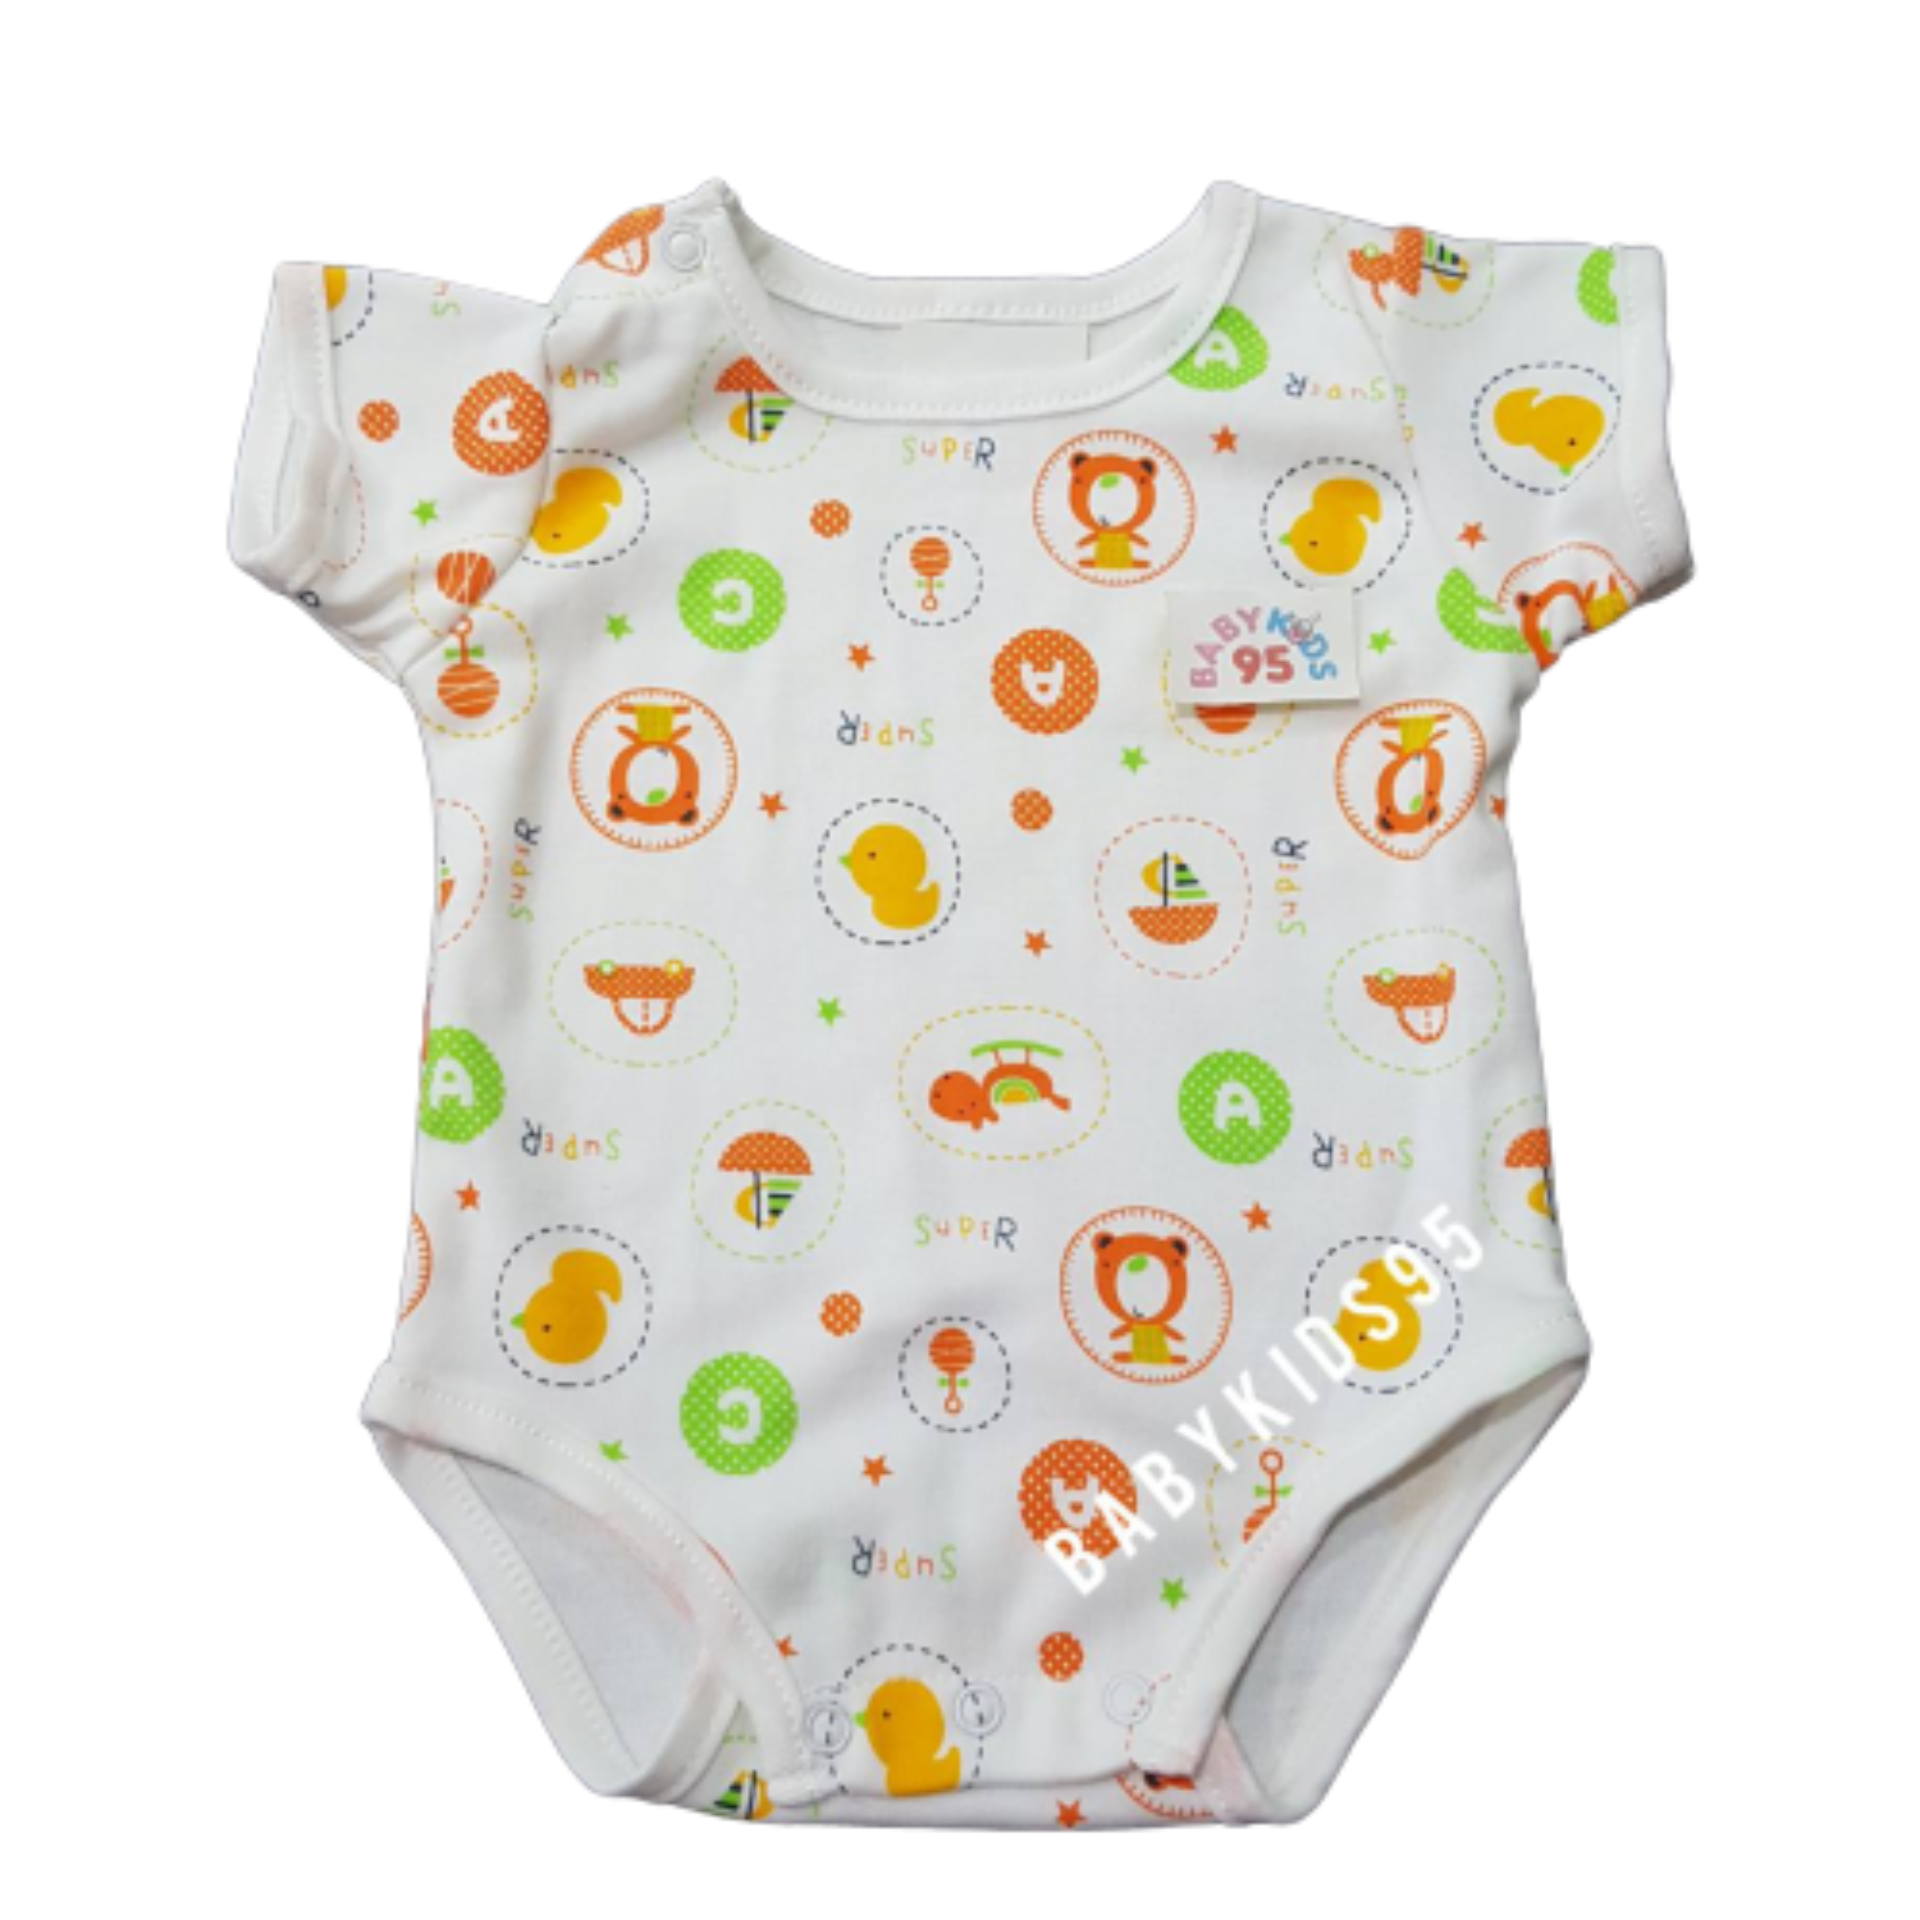 BABYKIDS95 (0-3 เดือน) บอดี้สูท เด็ก ชุดเด็ก เสื้อผ้าเด็ก Body suite Romper for Baby or Infant 0-3 months old ( 3M THR )  สีวัสดุ THR19